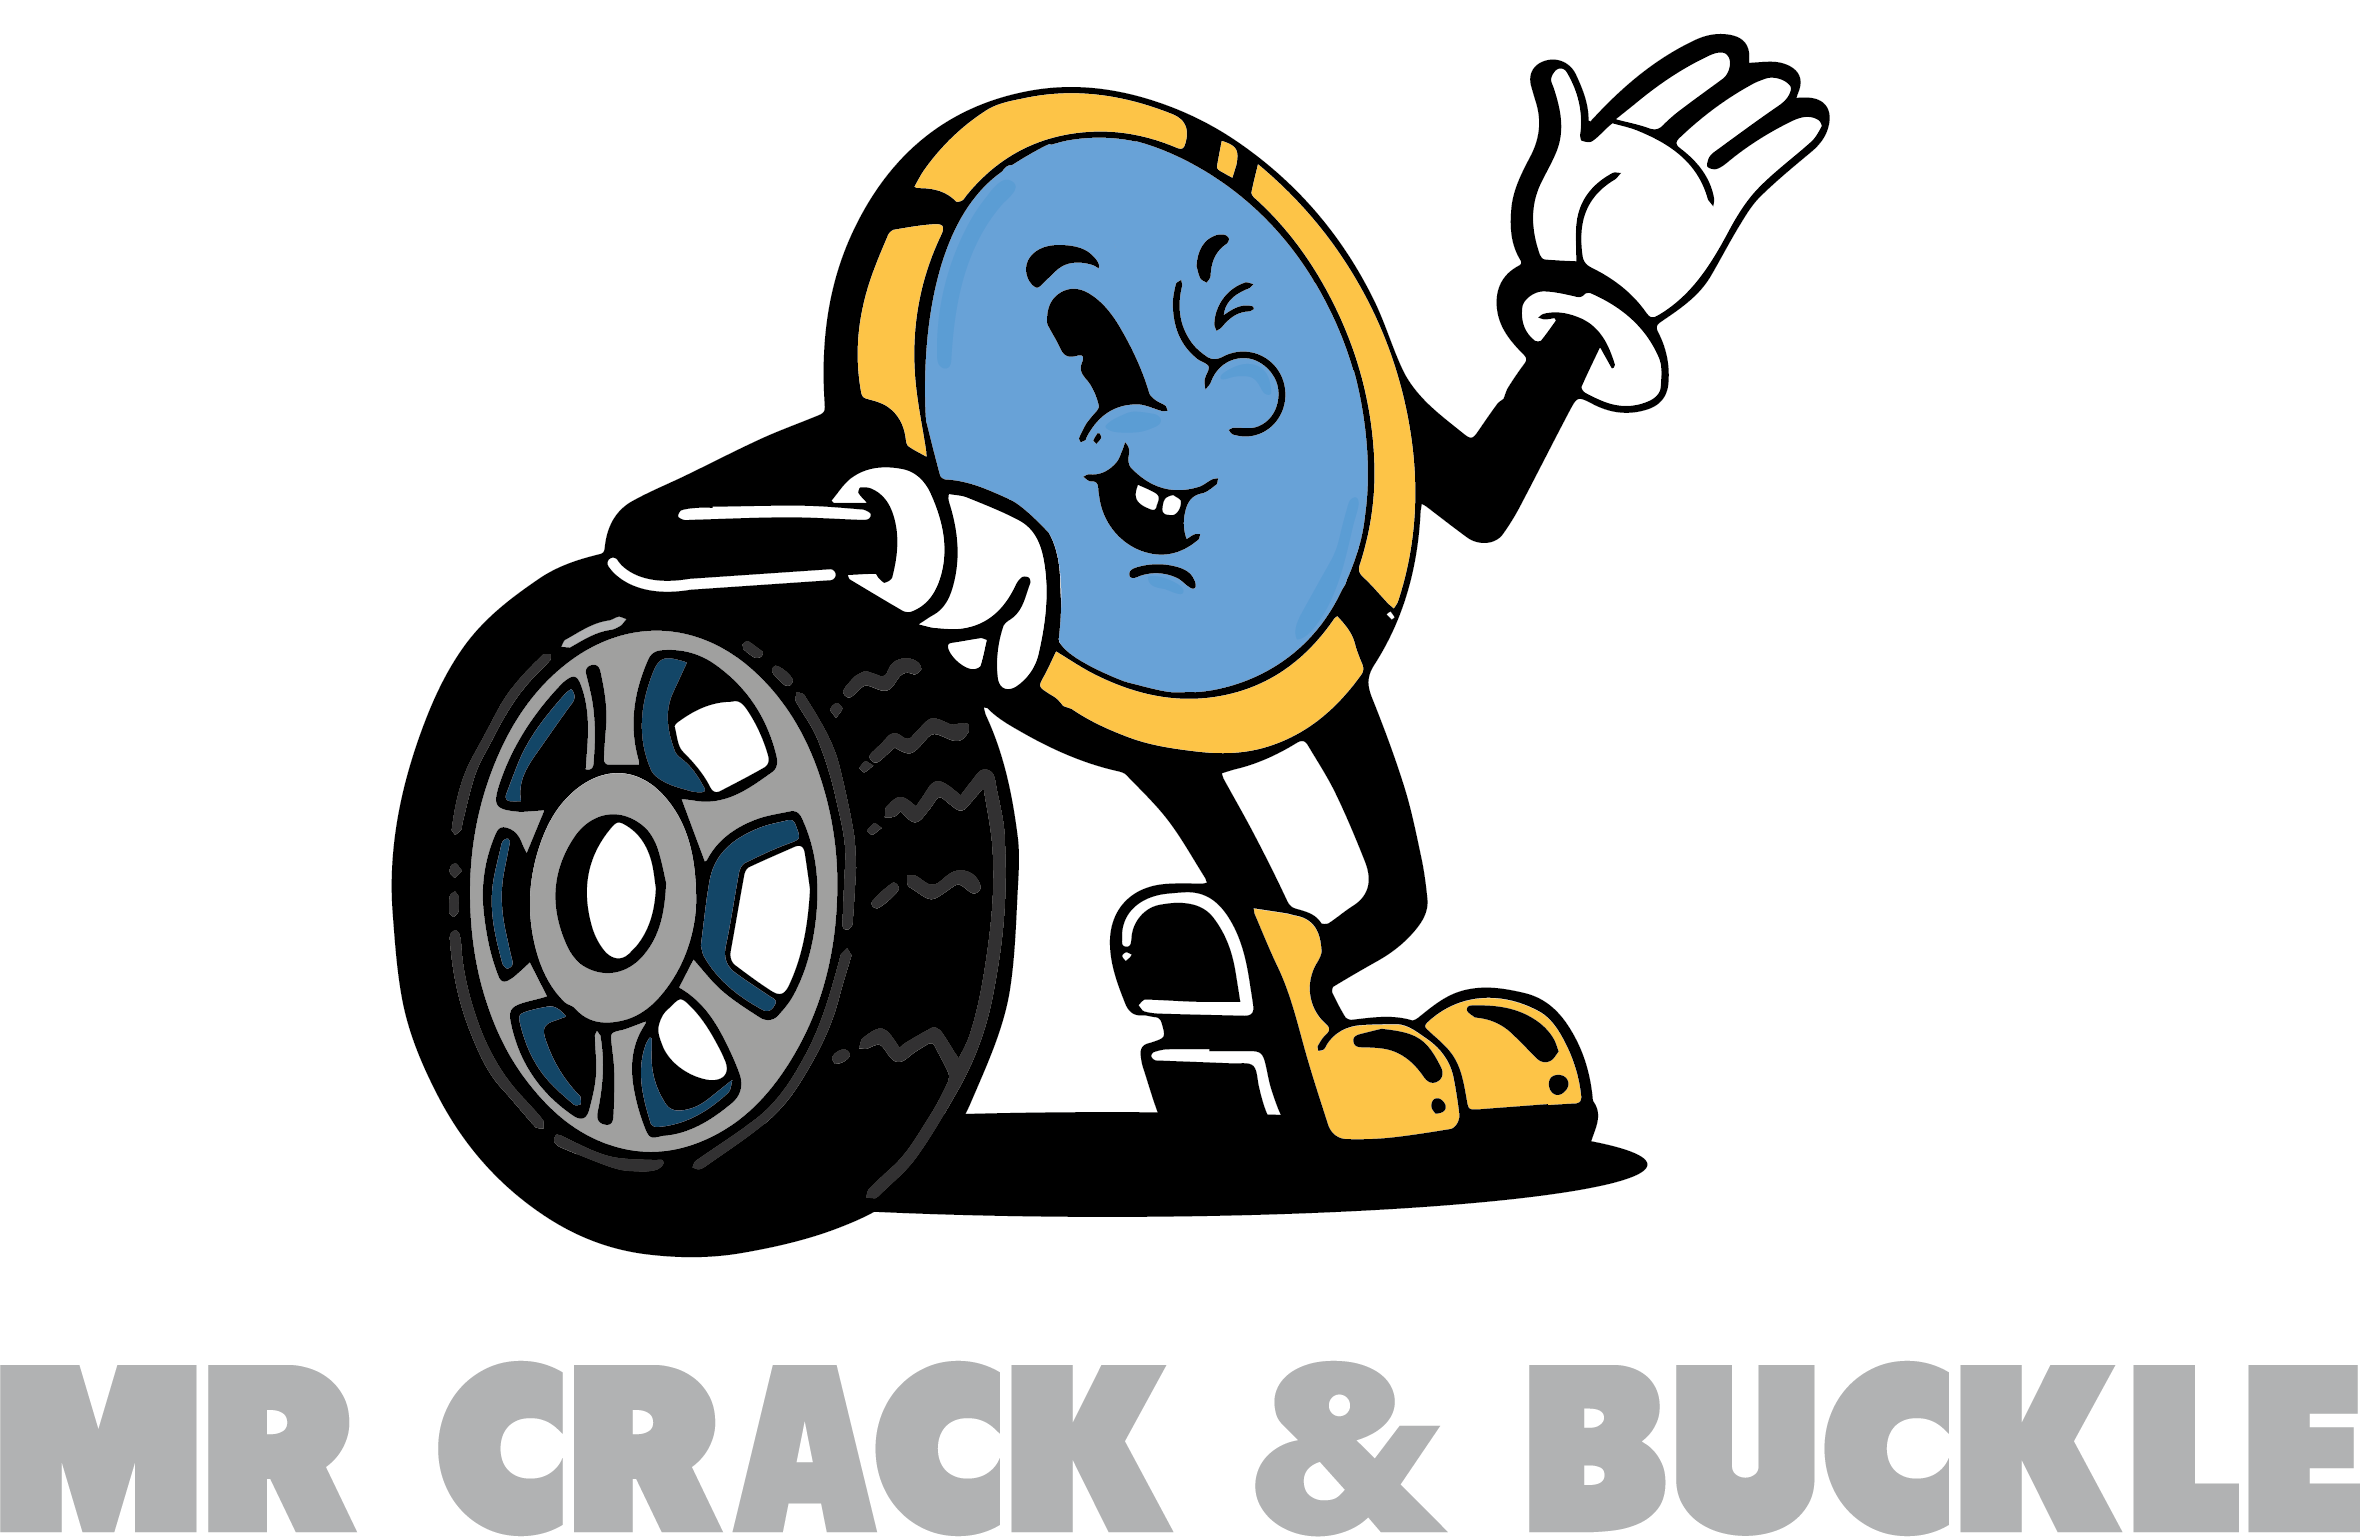 Mr. Crack & Buckle logo.